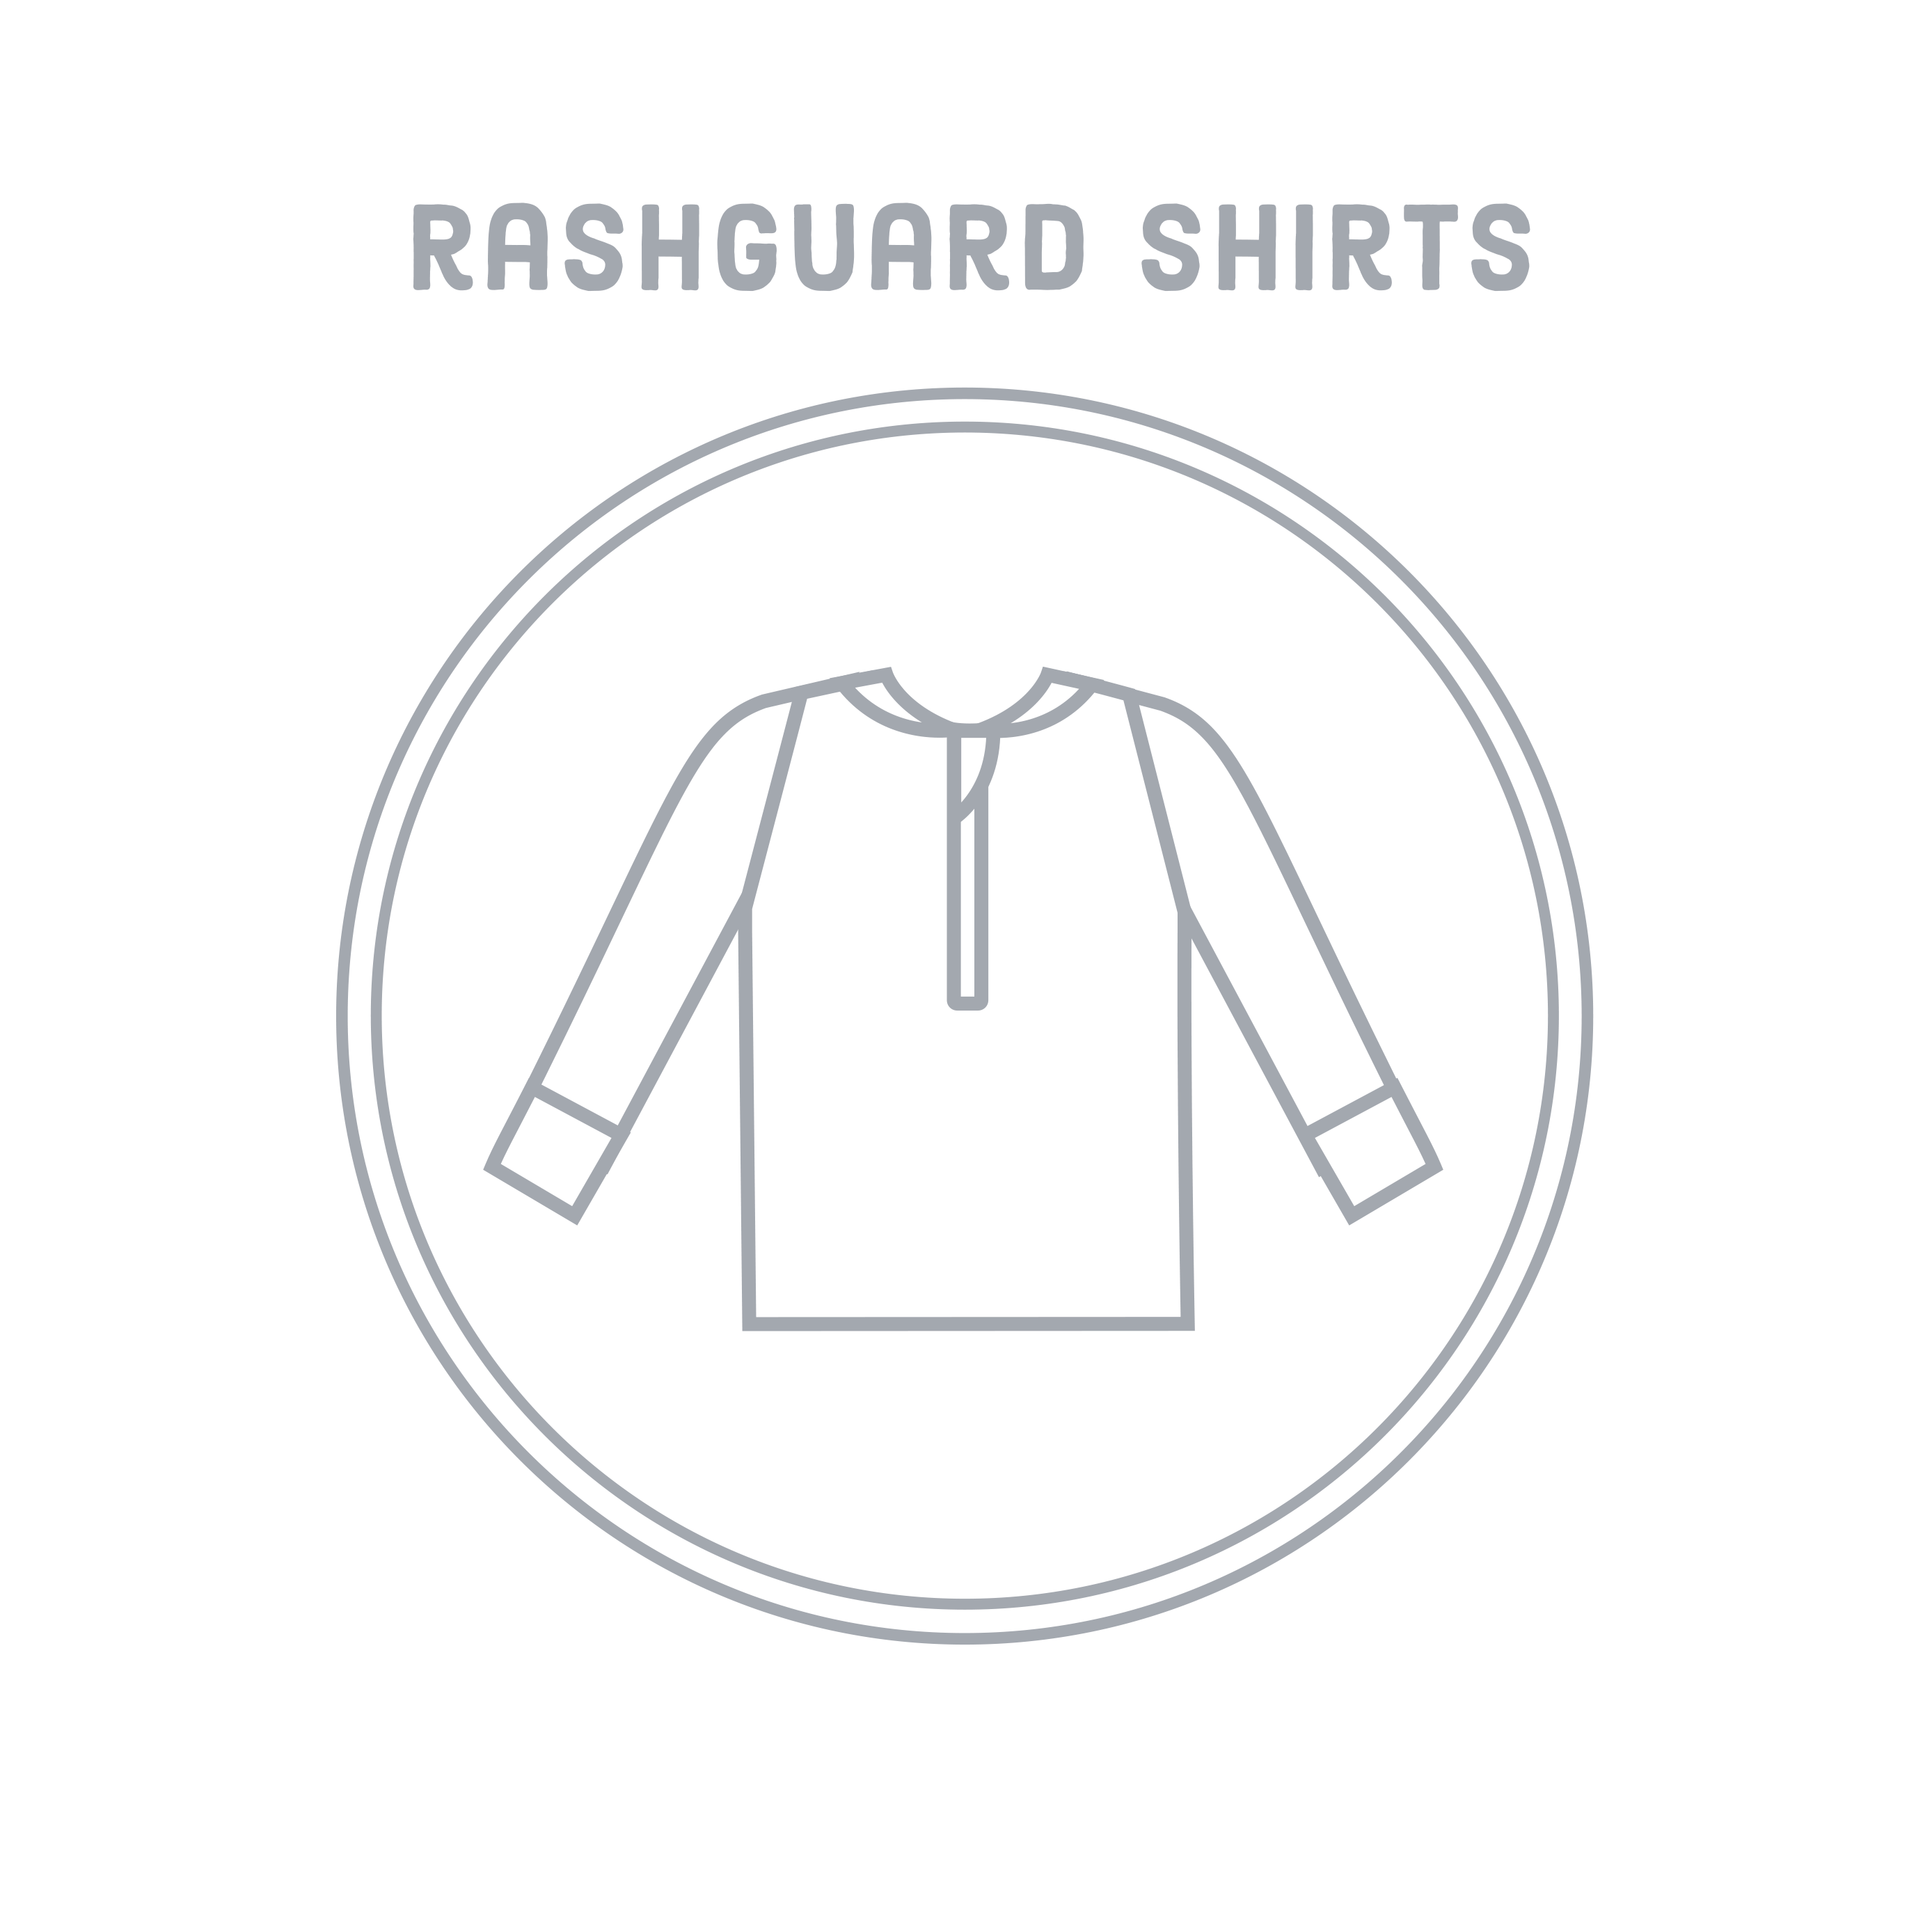 Rashguard Shirts